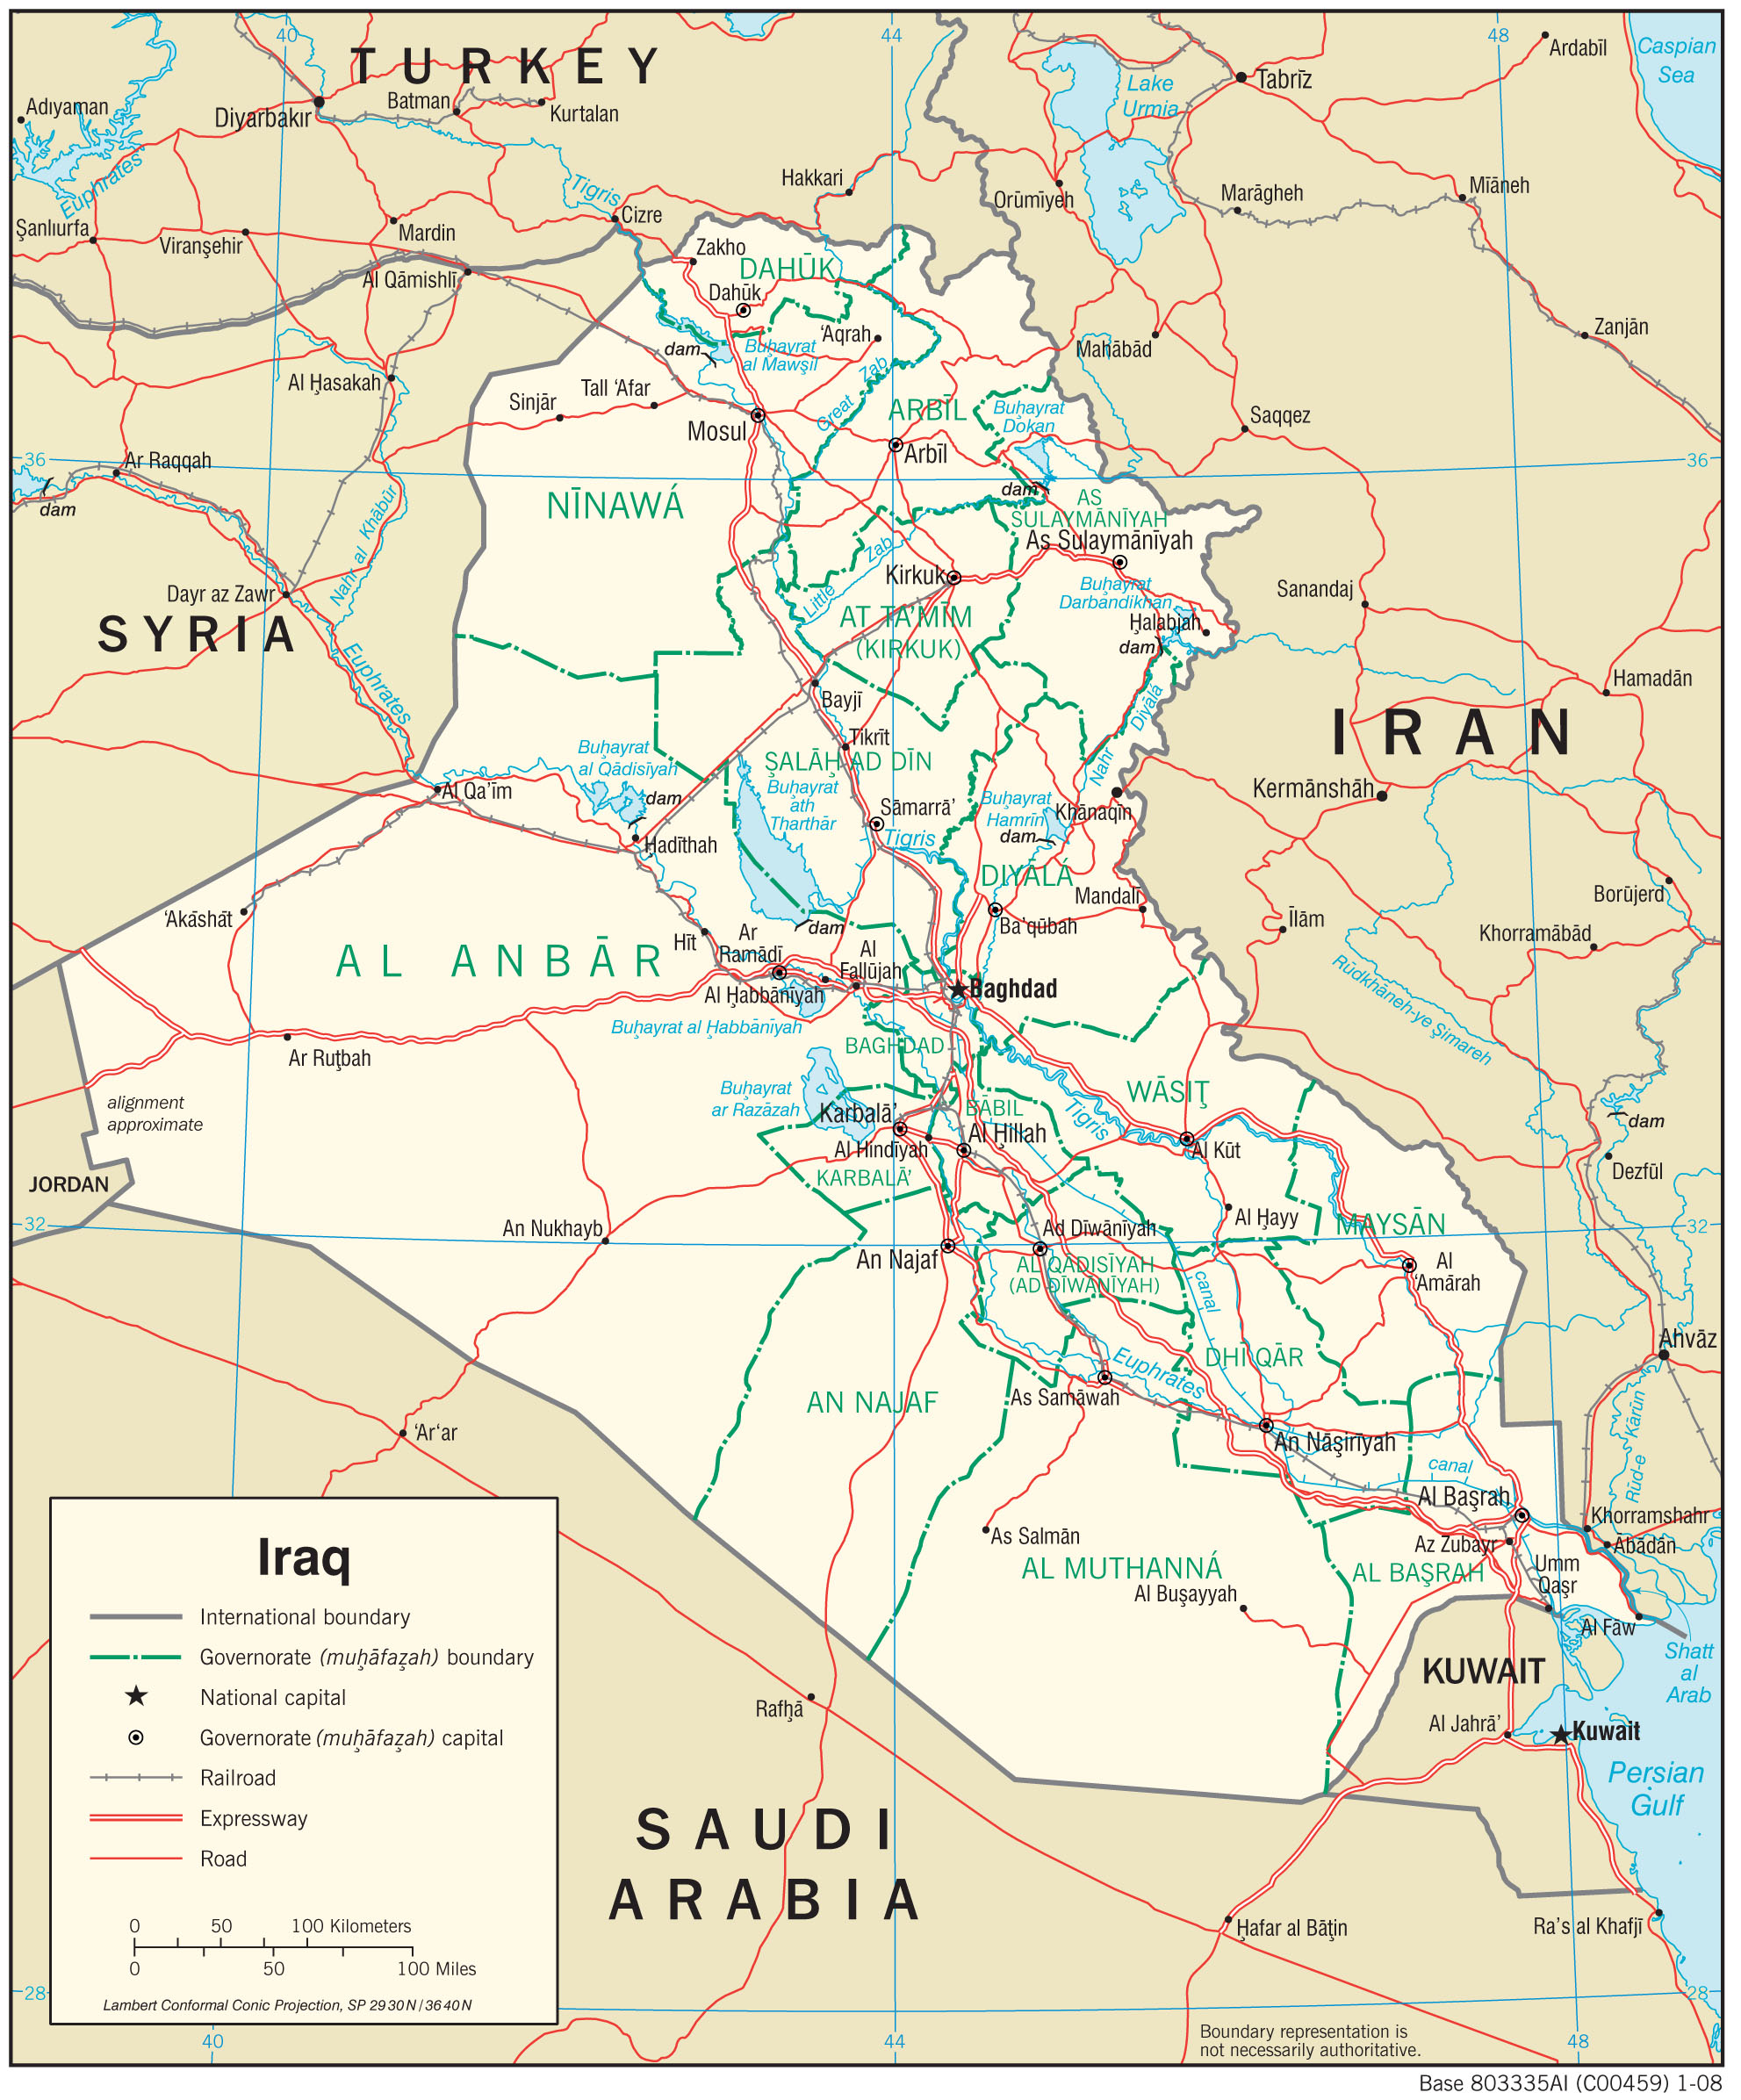 http://www.lib.utexas.edu/maps/middle_east_and_asia/iraq_pol-2009.jpg